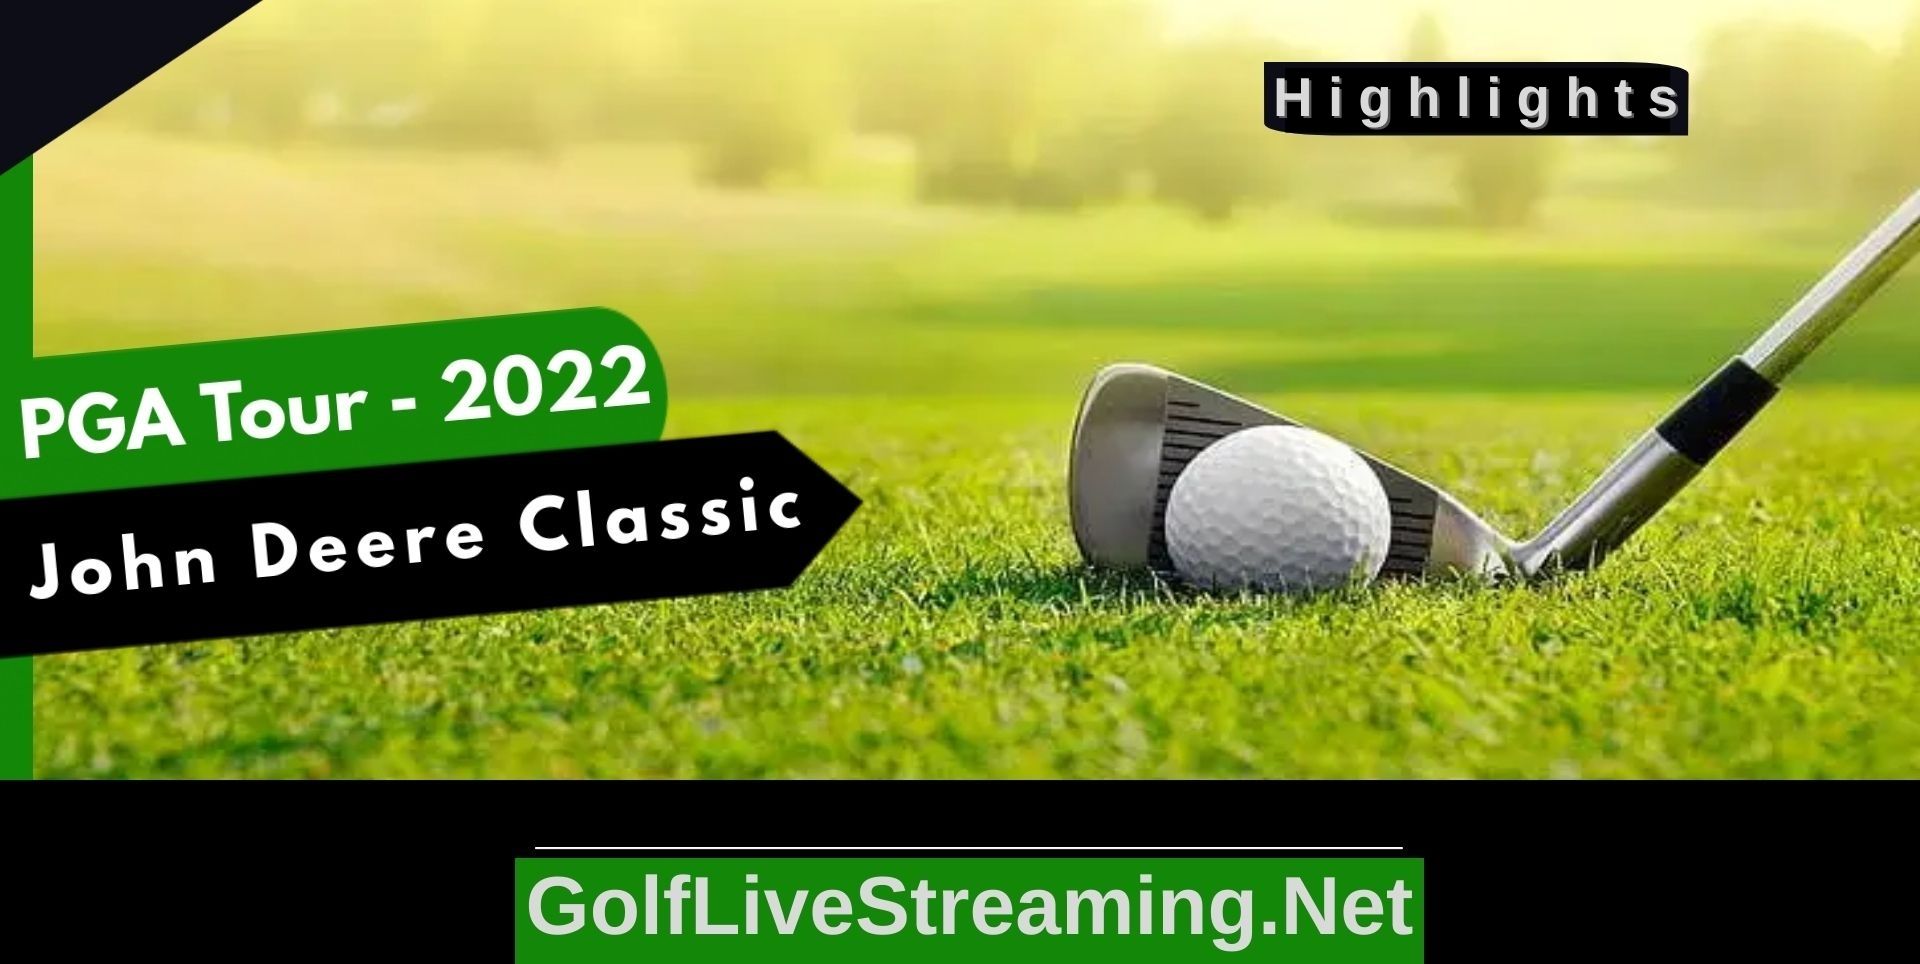 John Deere Classic Round 2 Highlights 2022 PGA Tour